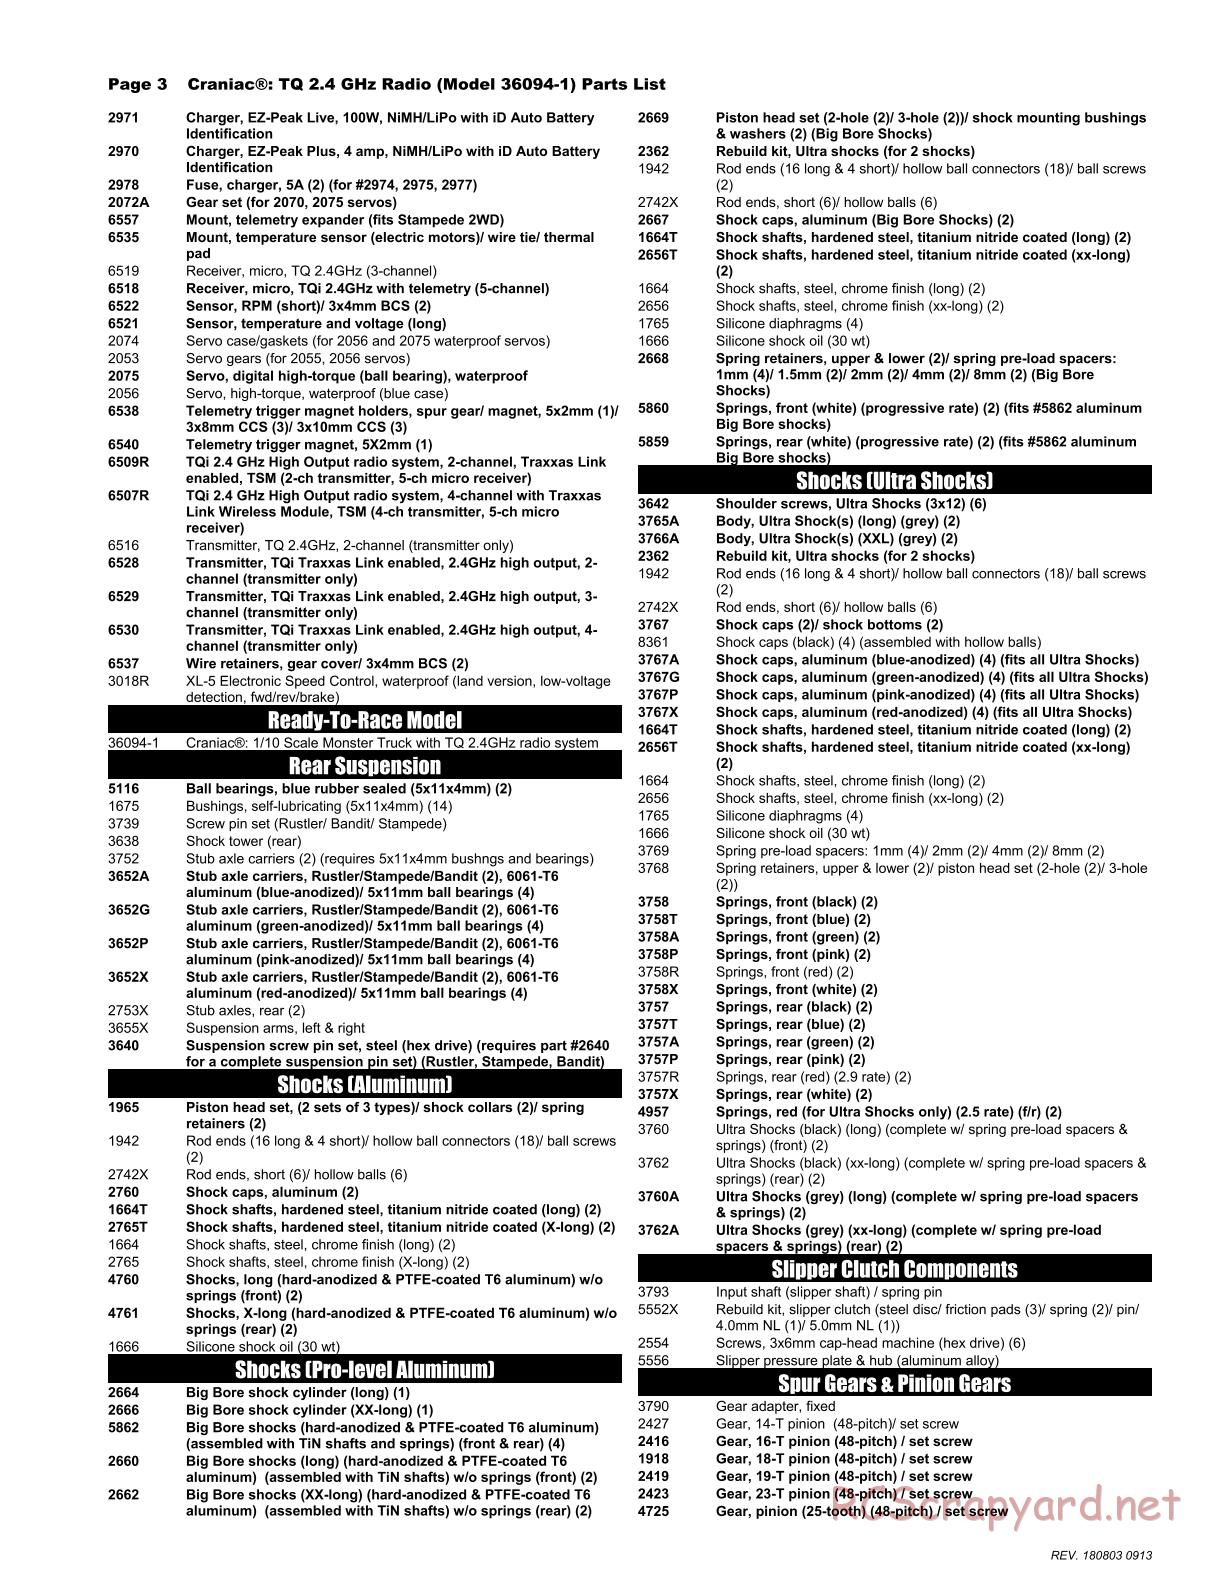 Traxxas - Craniac - Parts List - Page 3